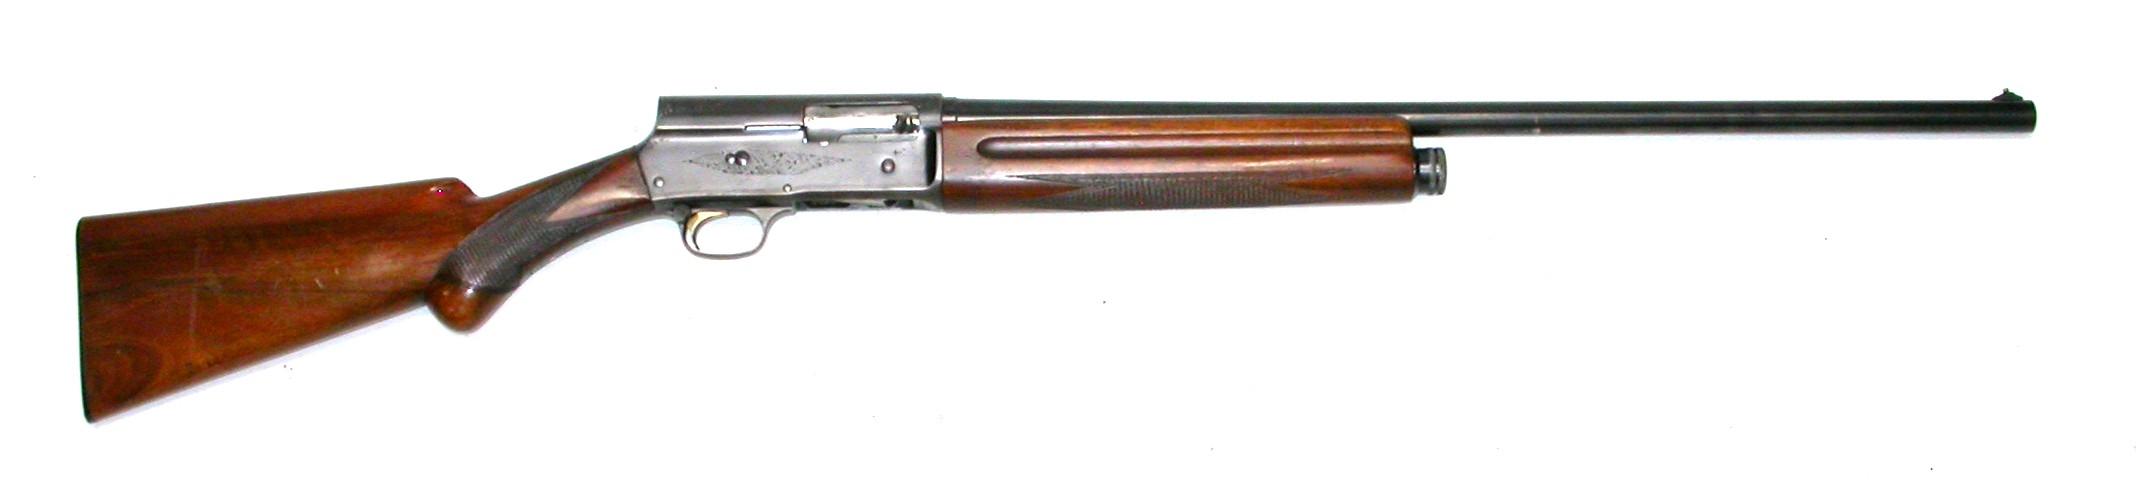 Browning Arms Auto-5 12 Ga Light Twelve Semi-Automatic Shotgun - FFL #A907 (LCC1)